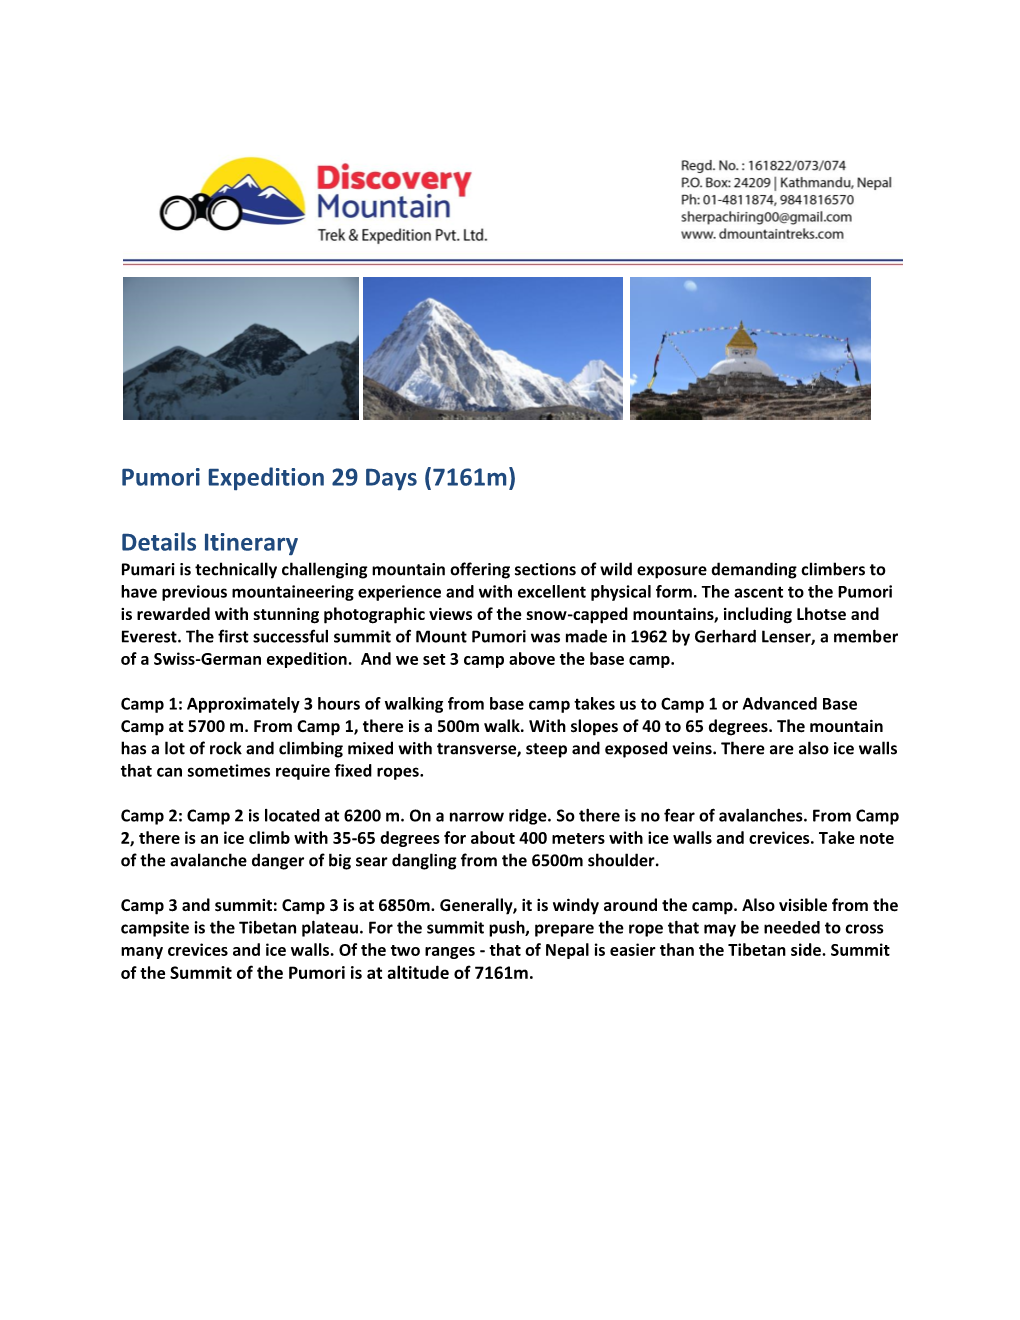 Pumori Expedition 29 Days (7161M)